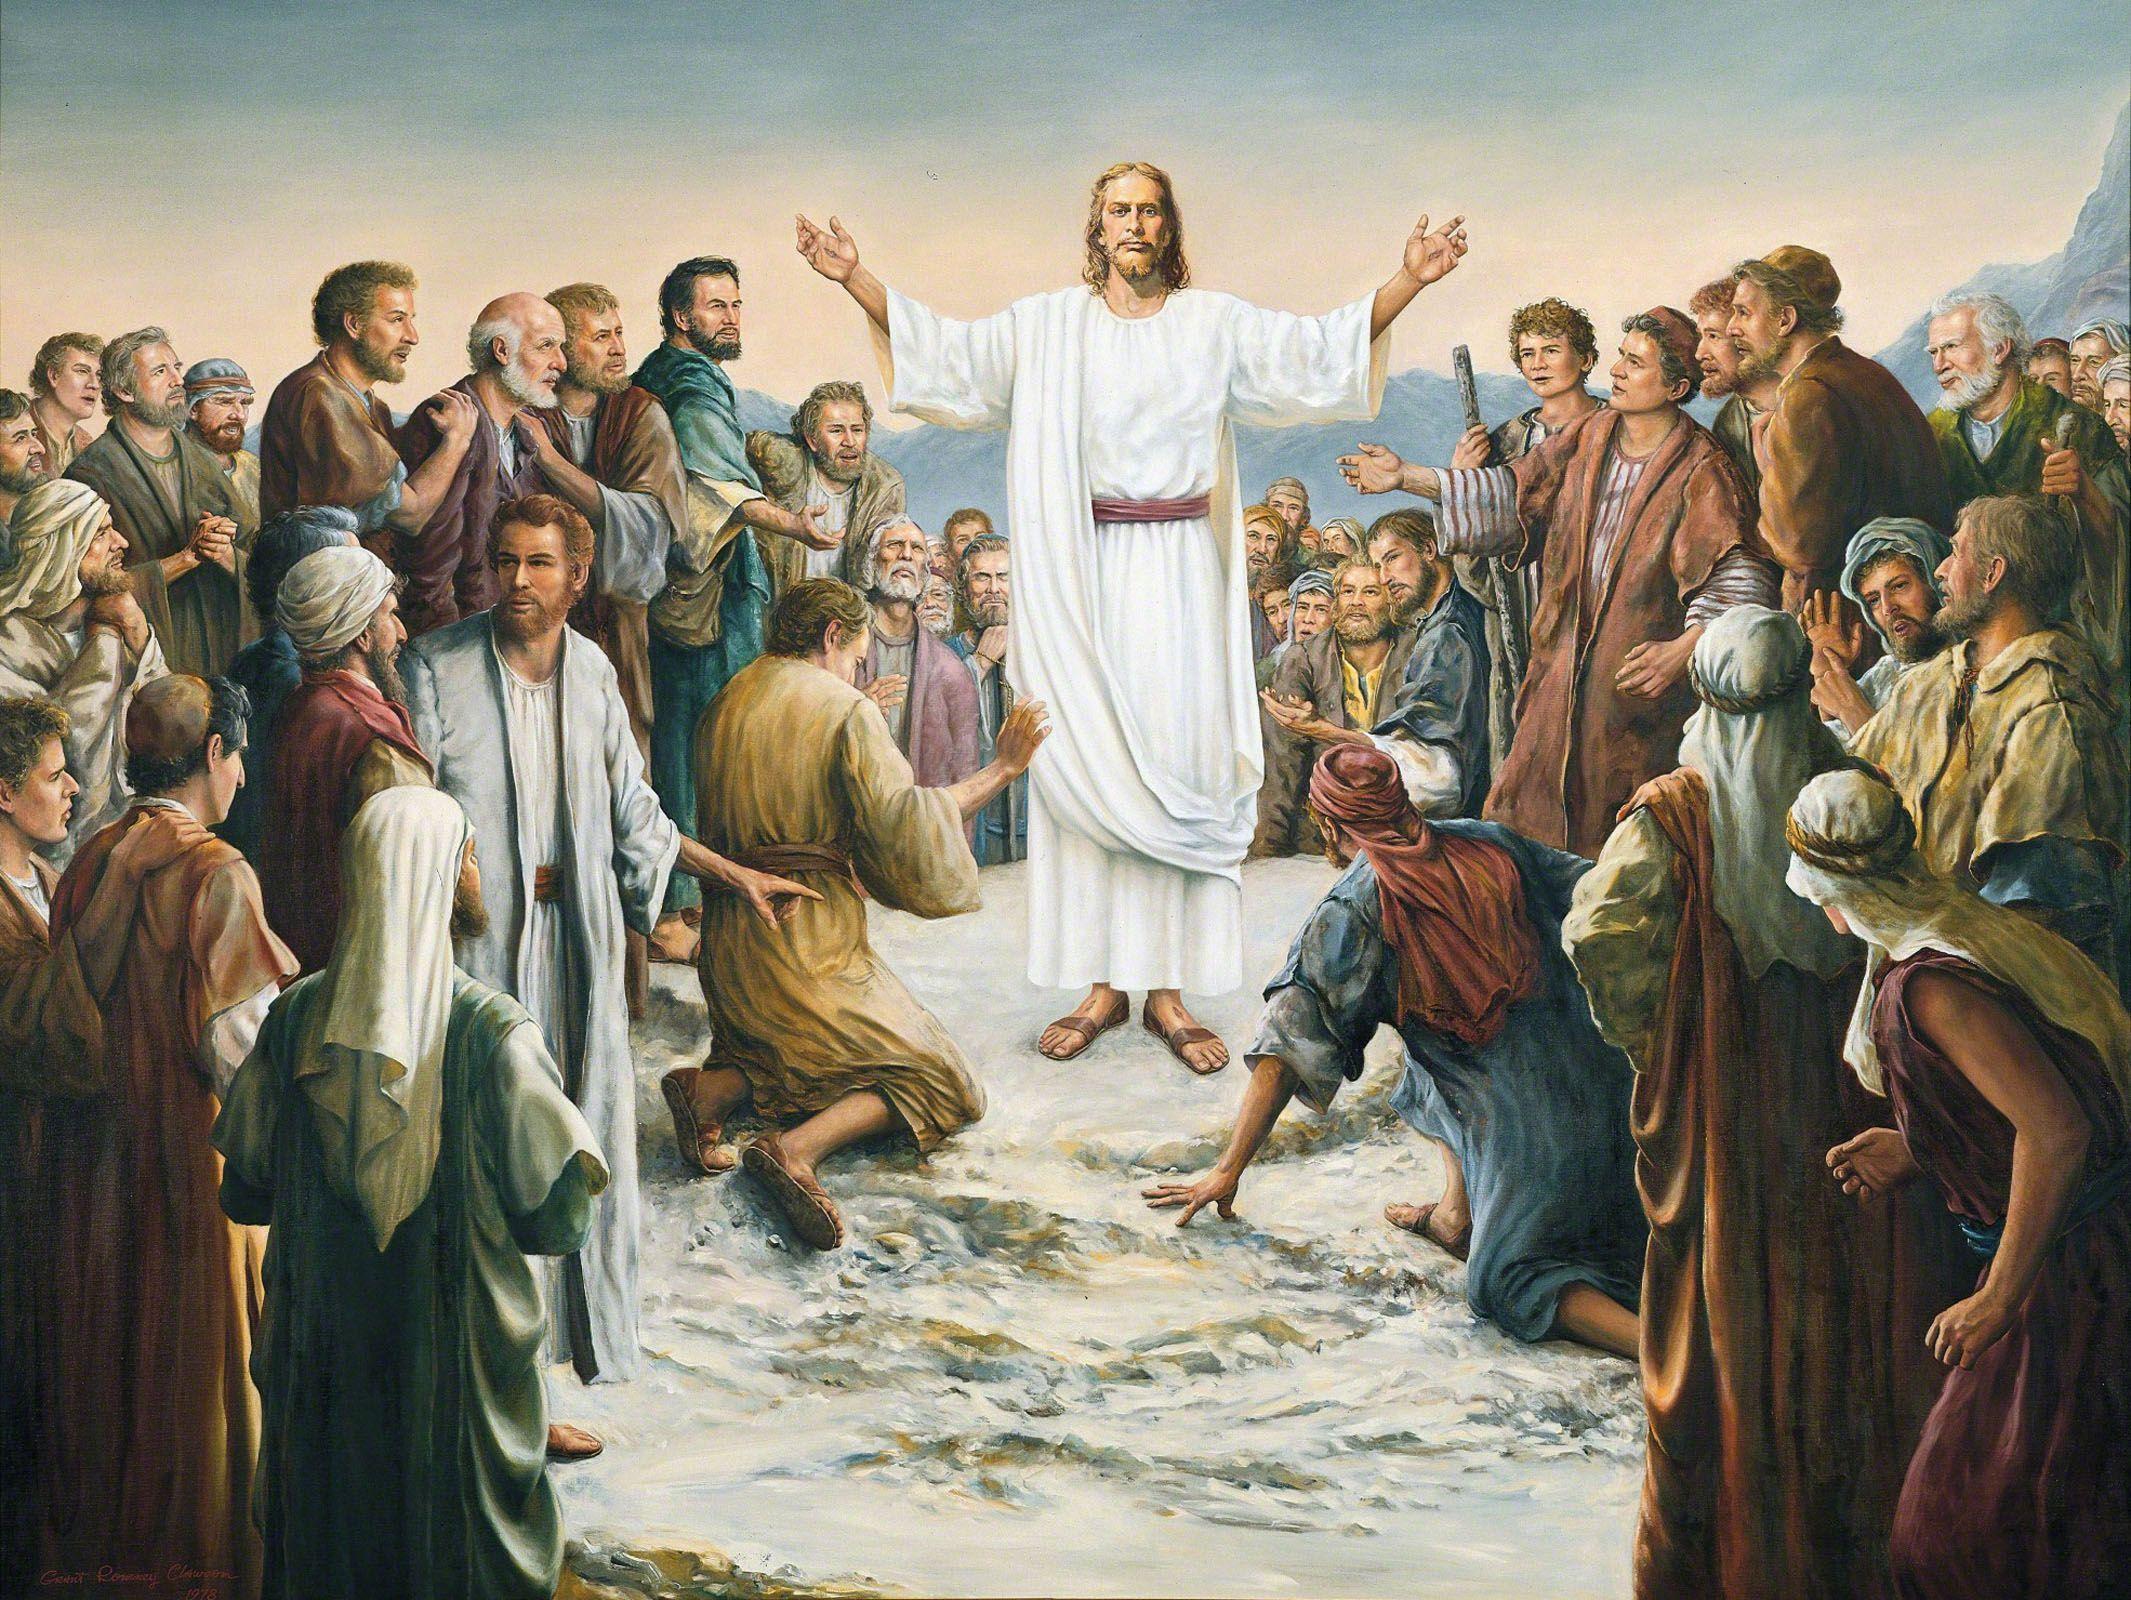 Christ Resurrected Appears